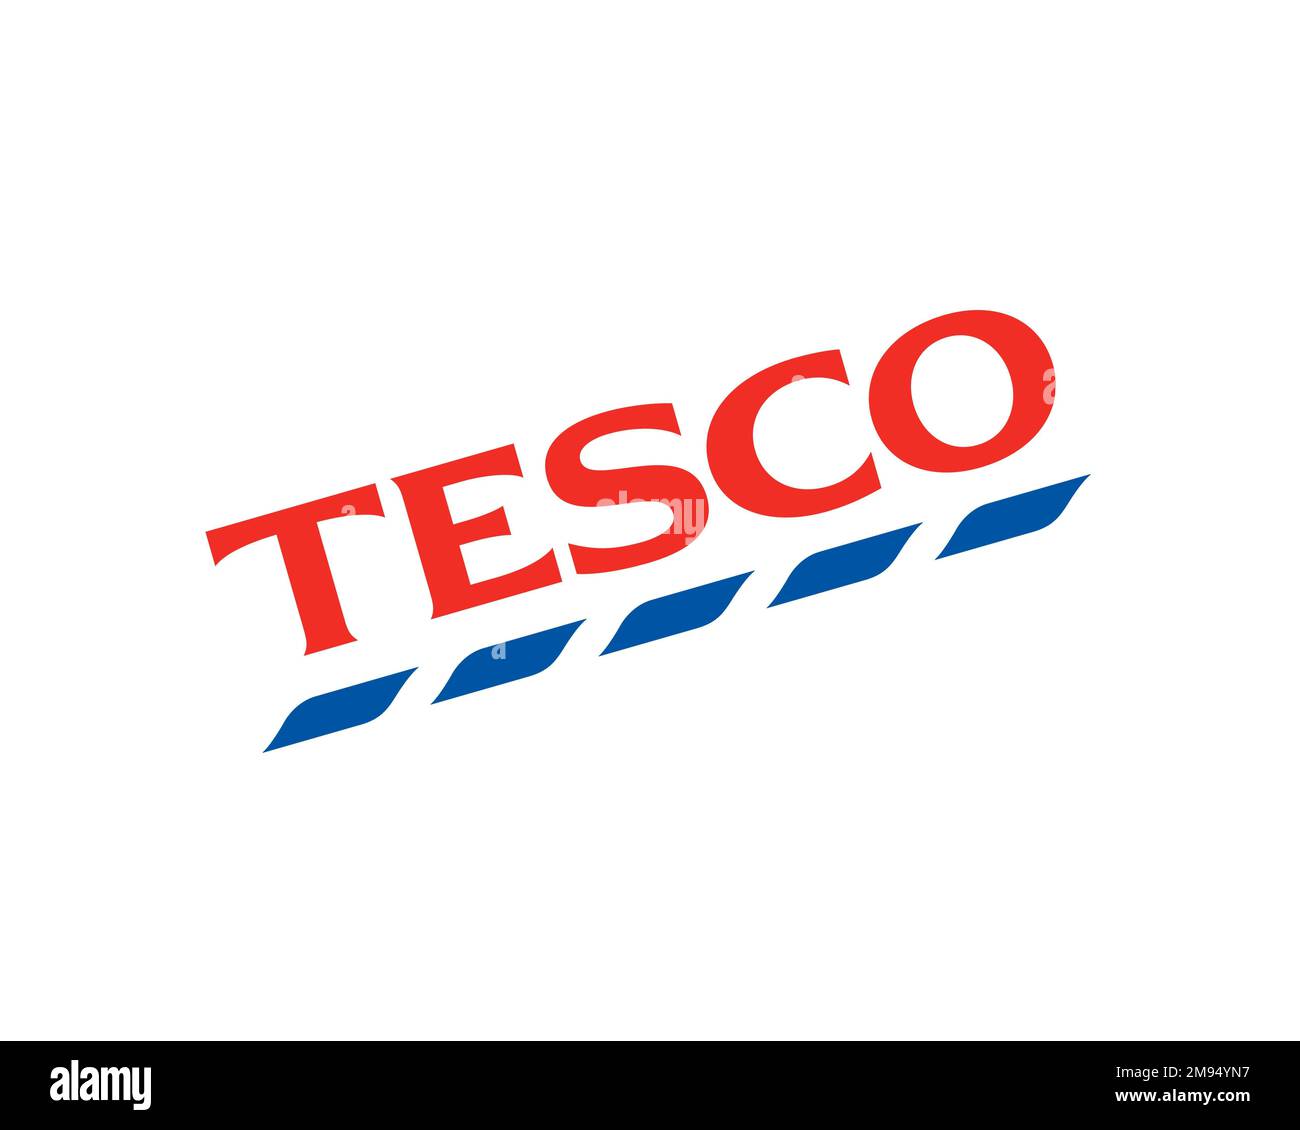 Tesco. com, rotated logo, white background Stock Photo